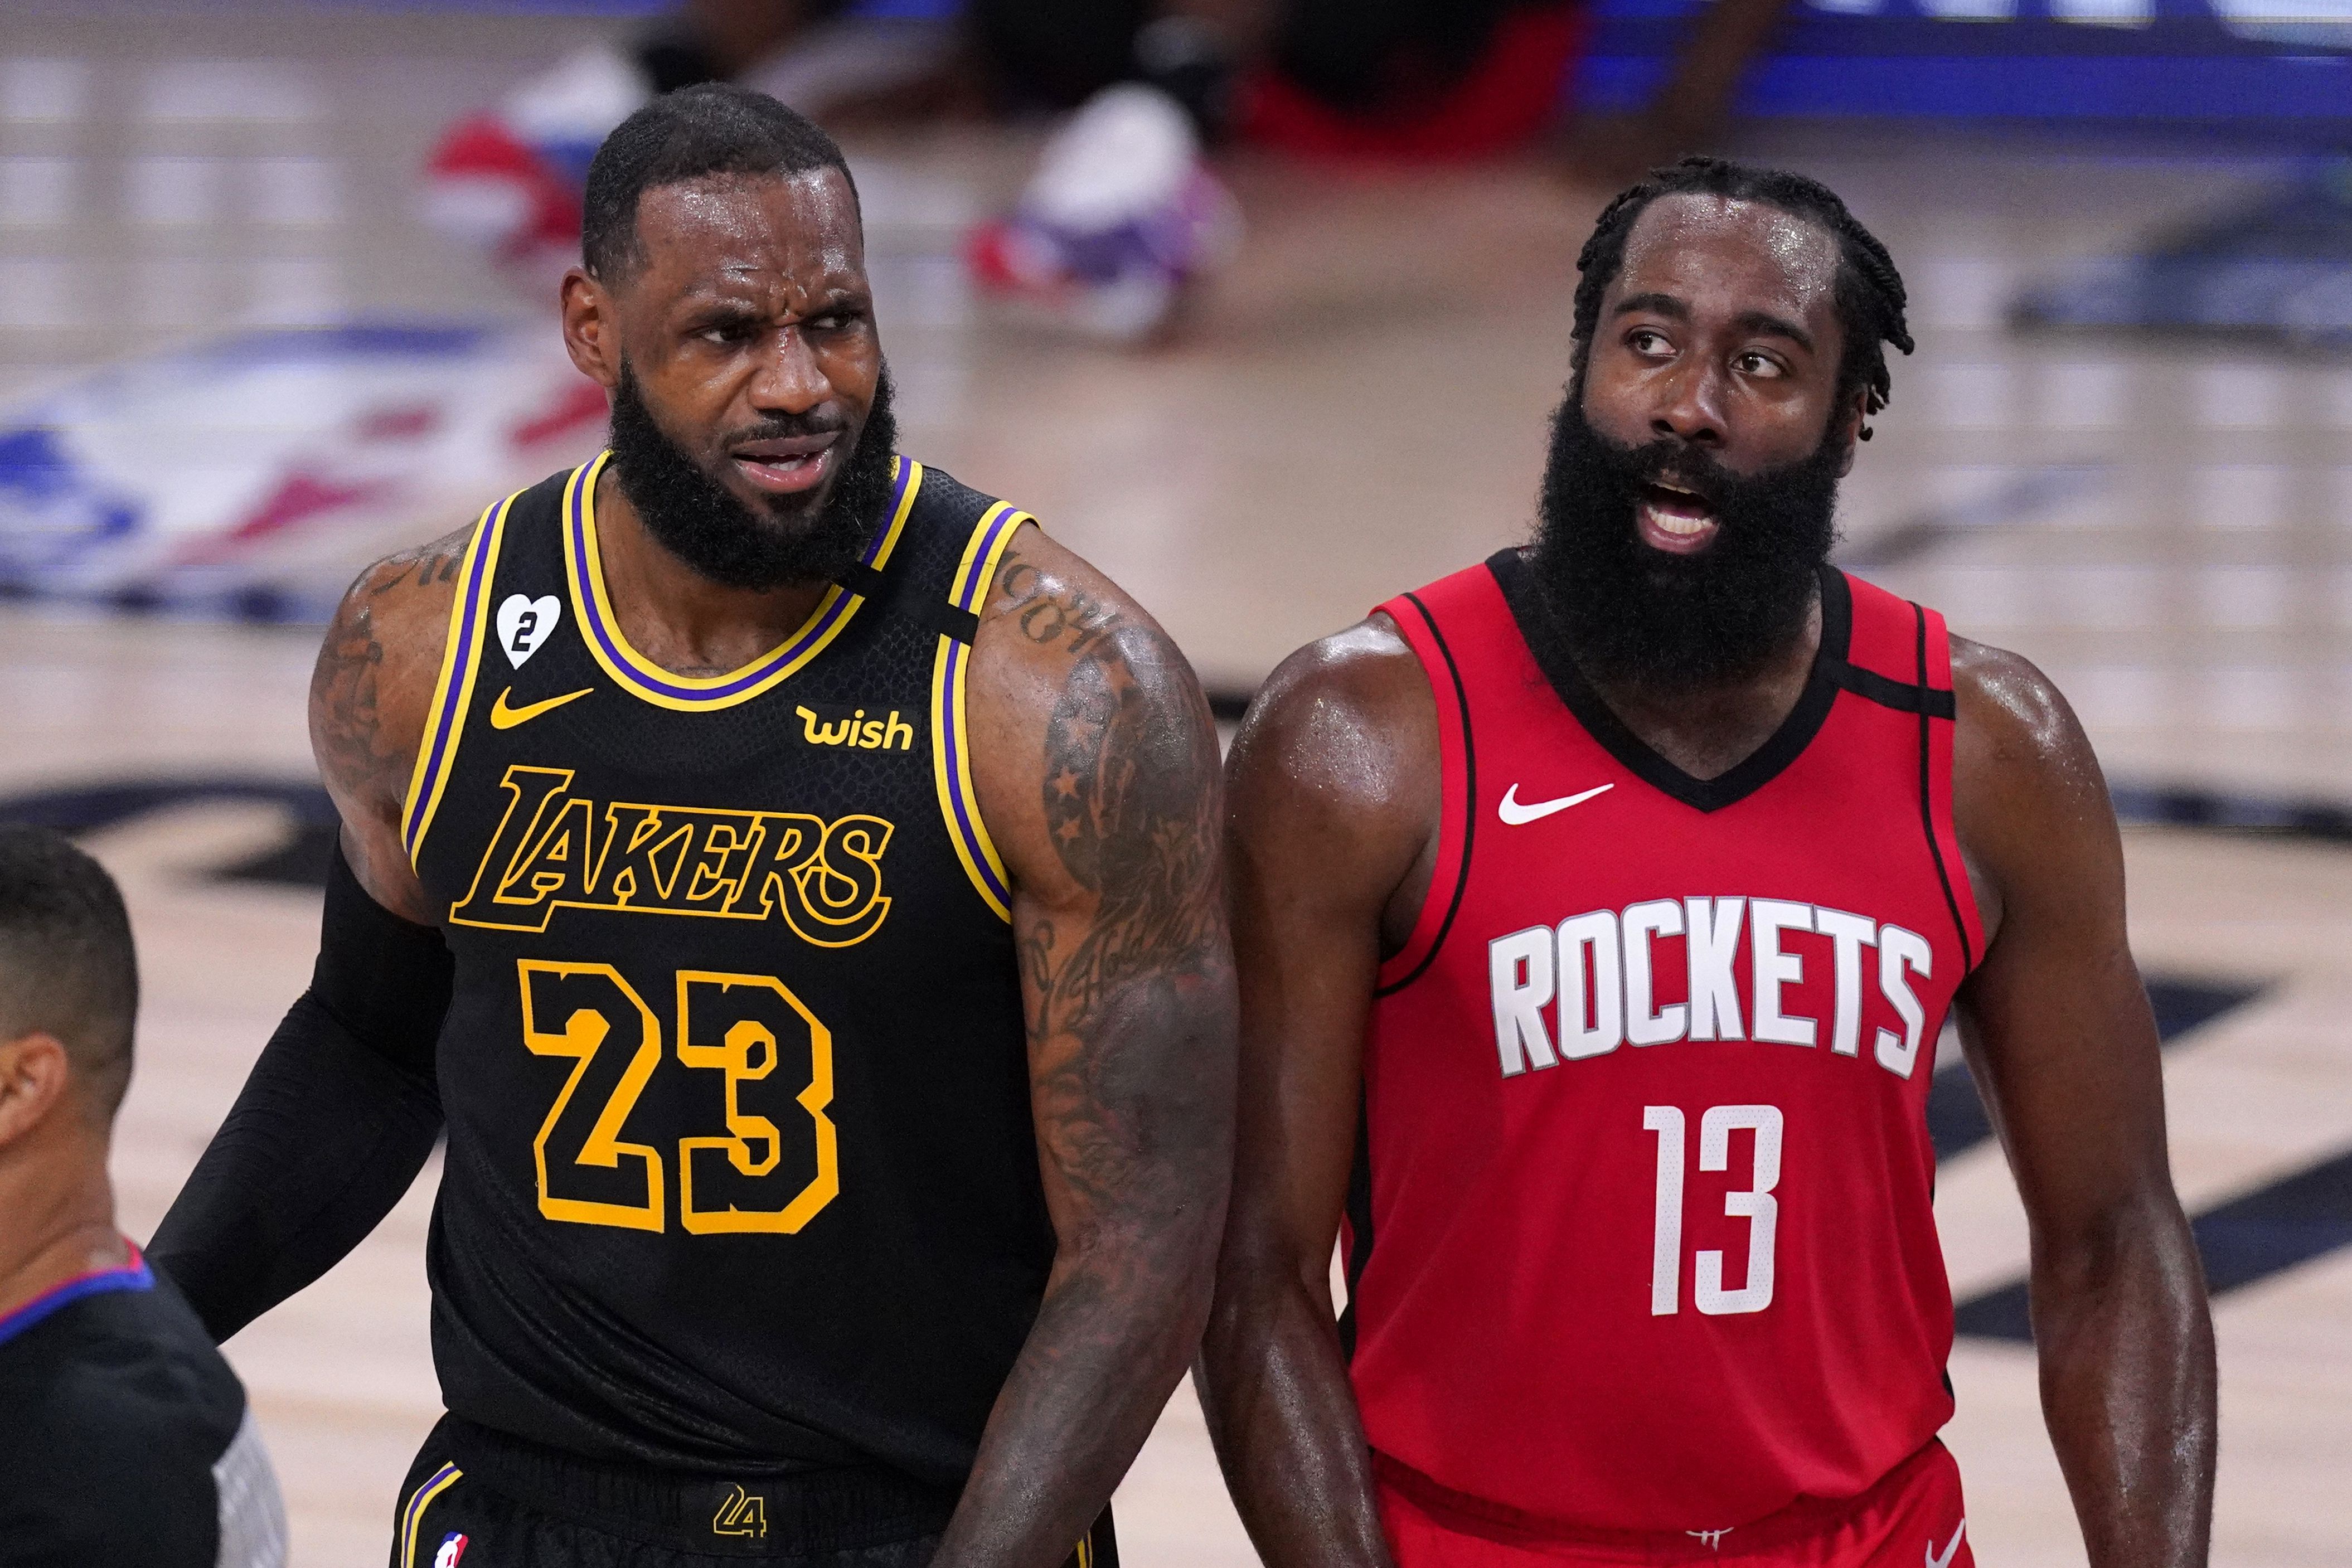 Houston Rockets vs. Los Angeles Lakers